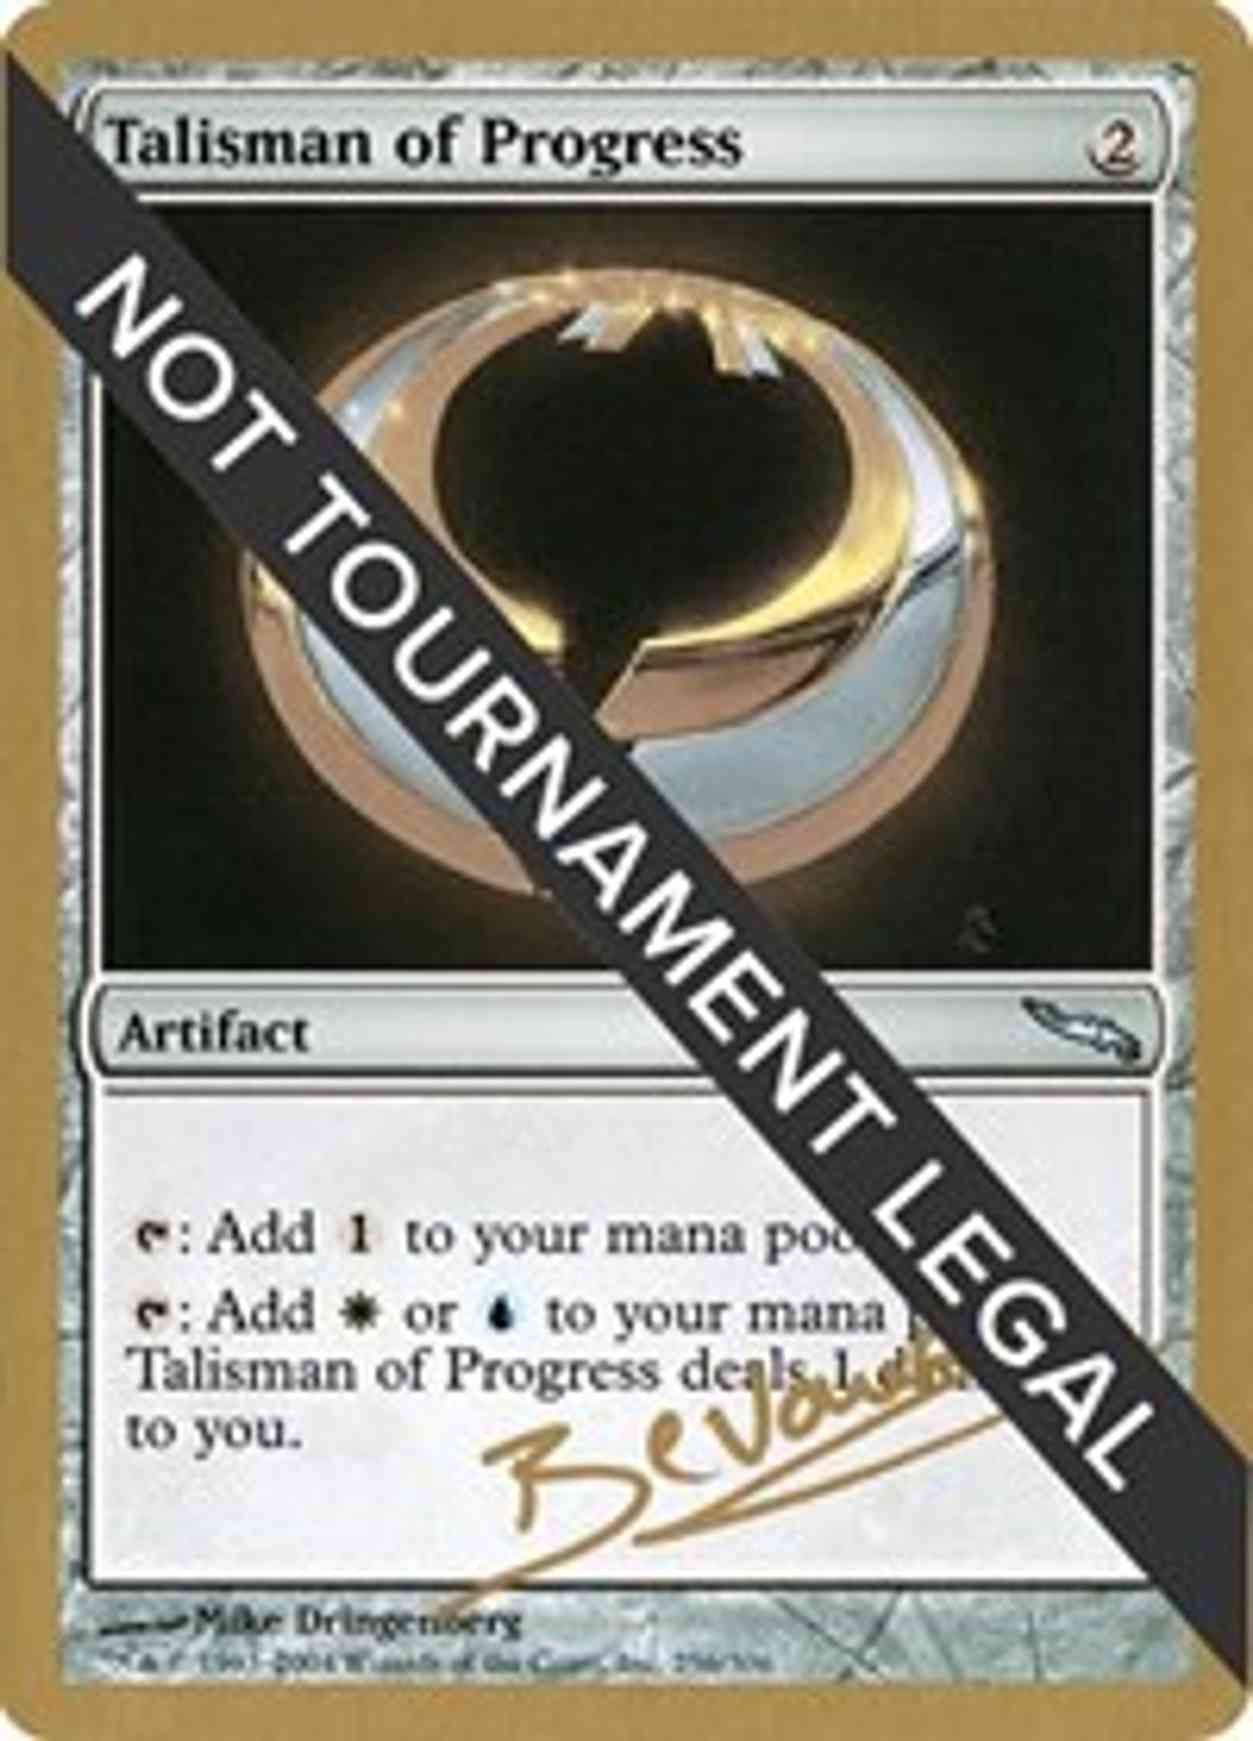 Talisman of Progress - 2004 Manuel Bevand (MRD) magic card front